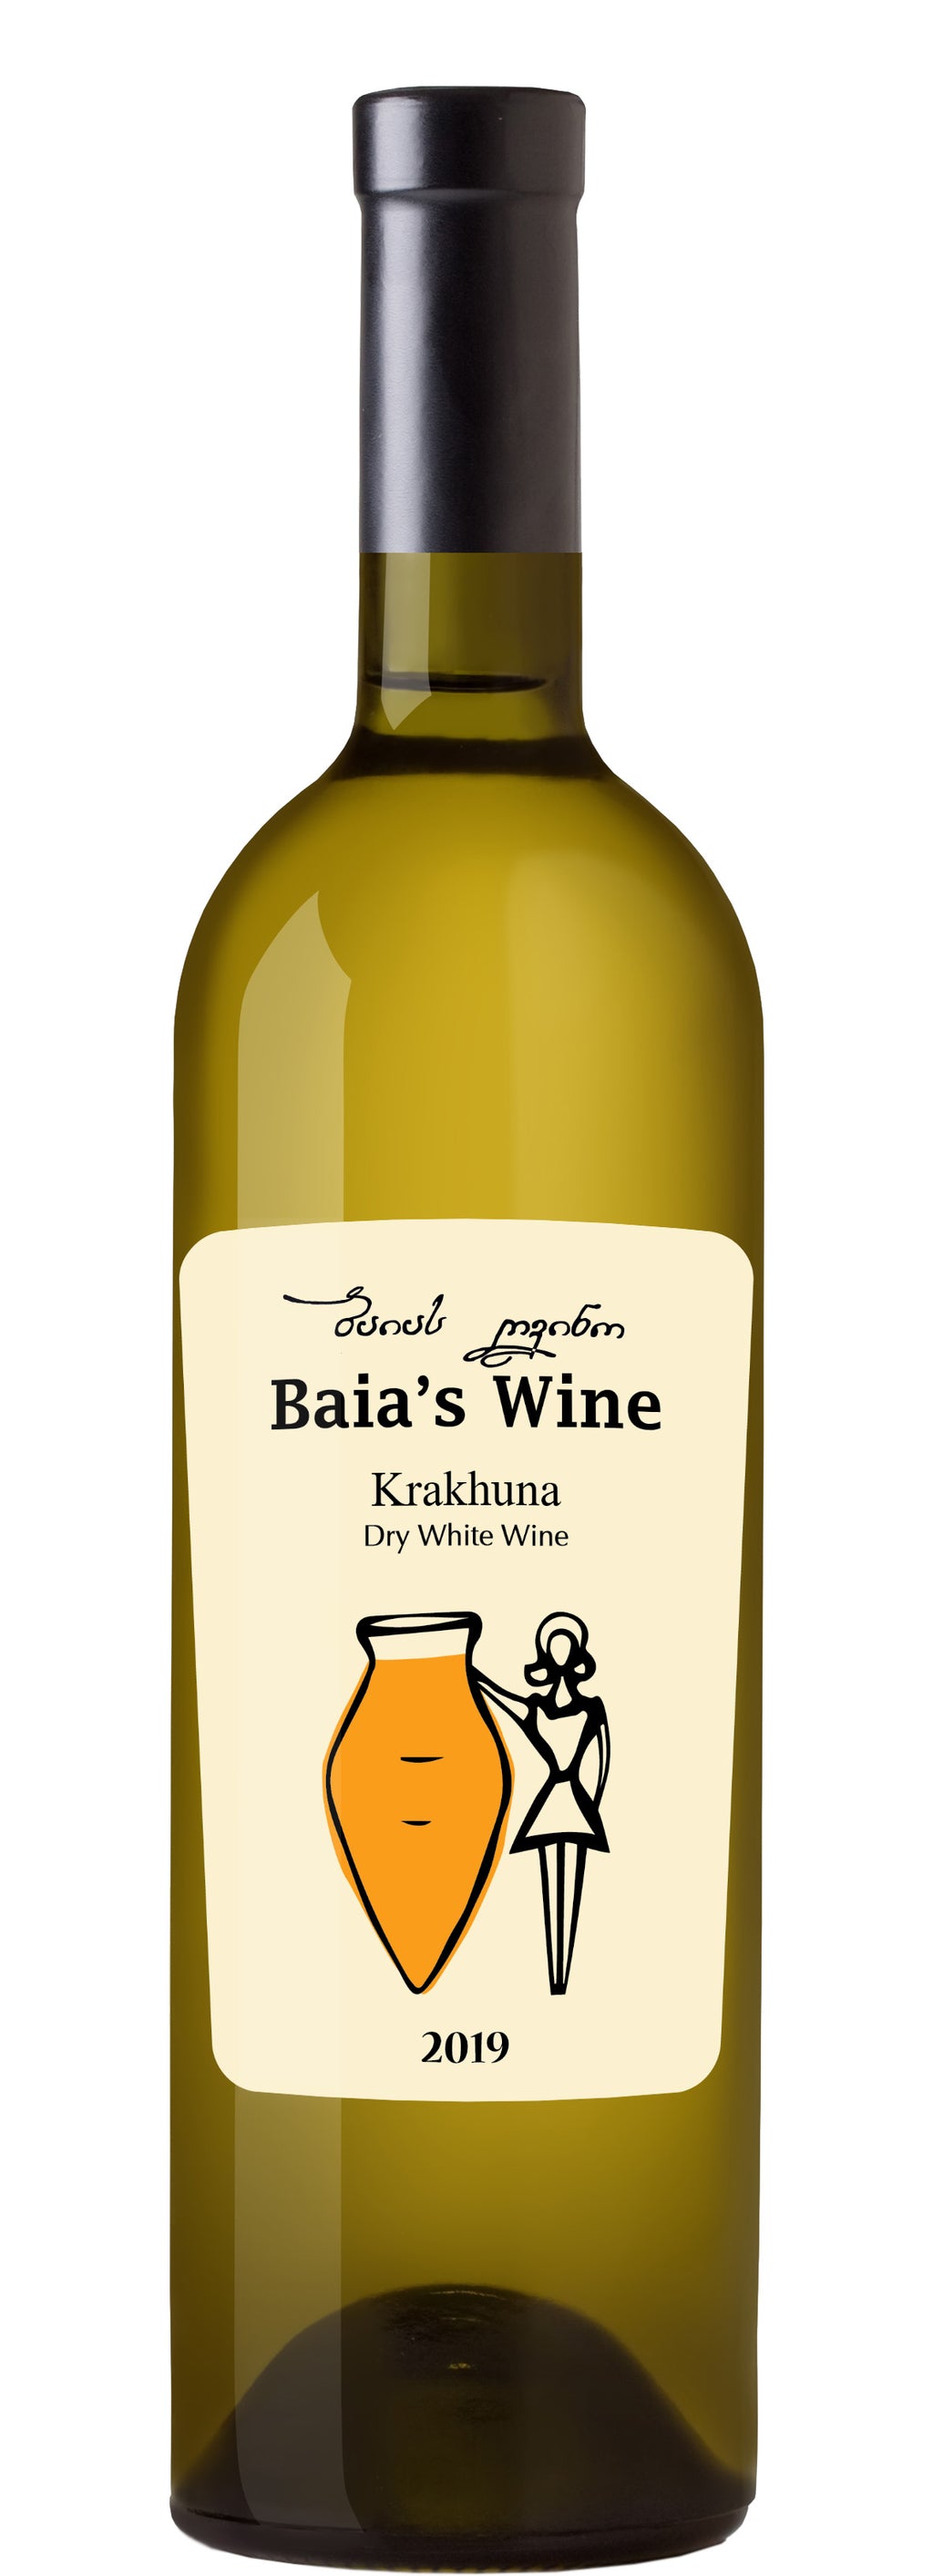 Baia's Wine, Krakhuna, dry white wine, 2019